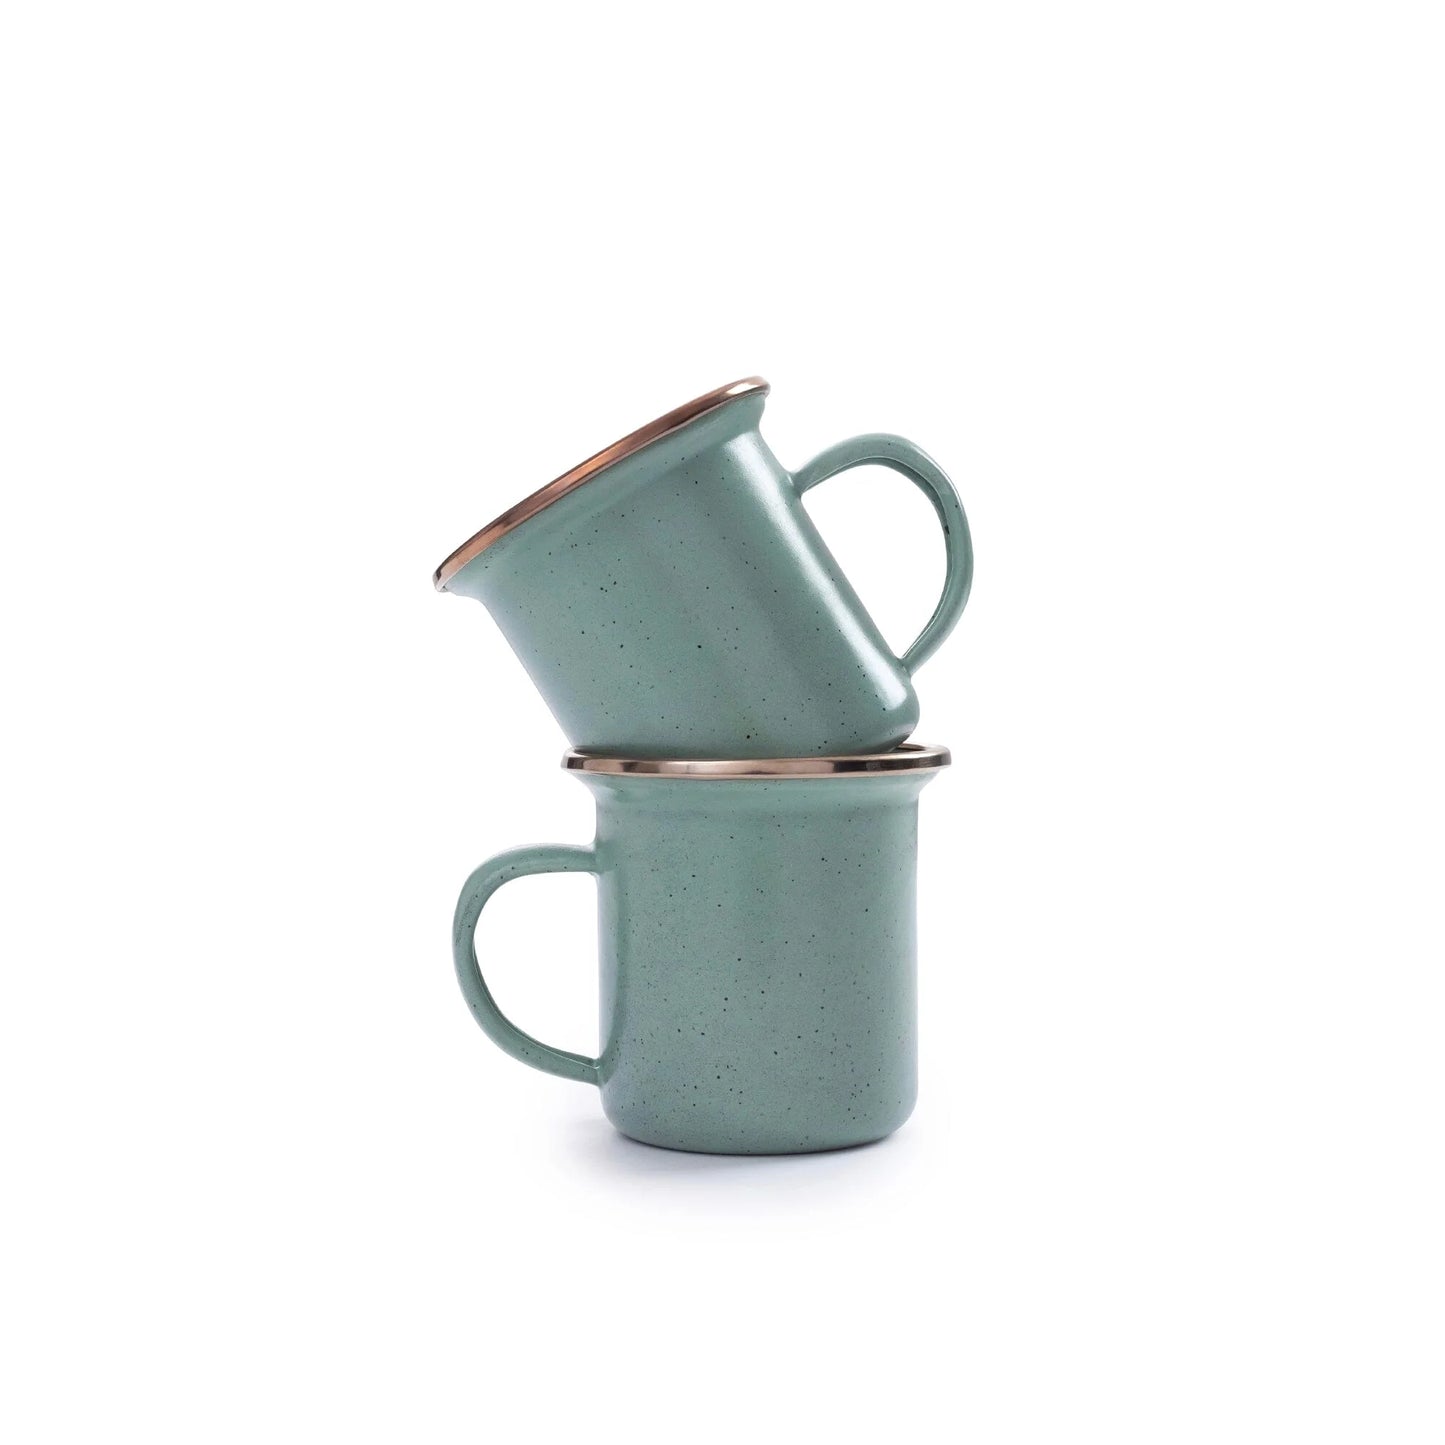 Enamel Espresso Cup Set - Mint